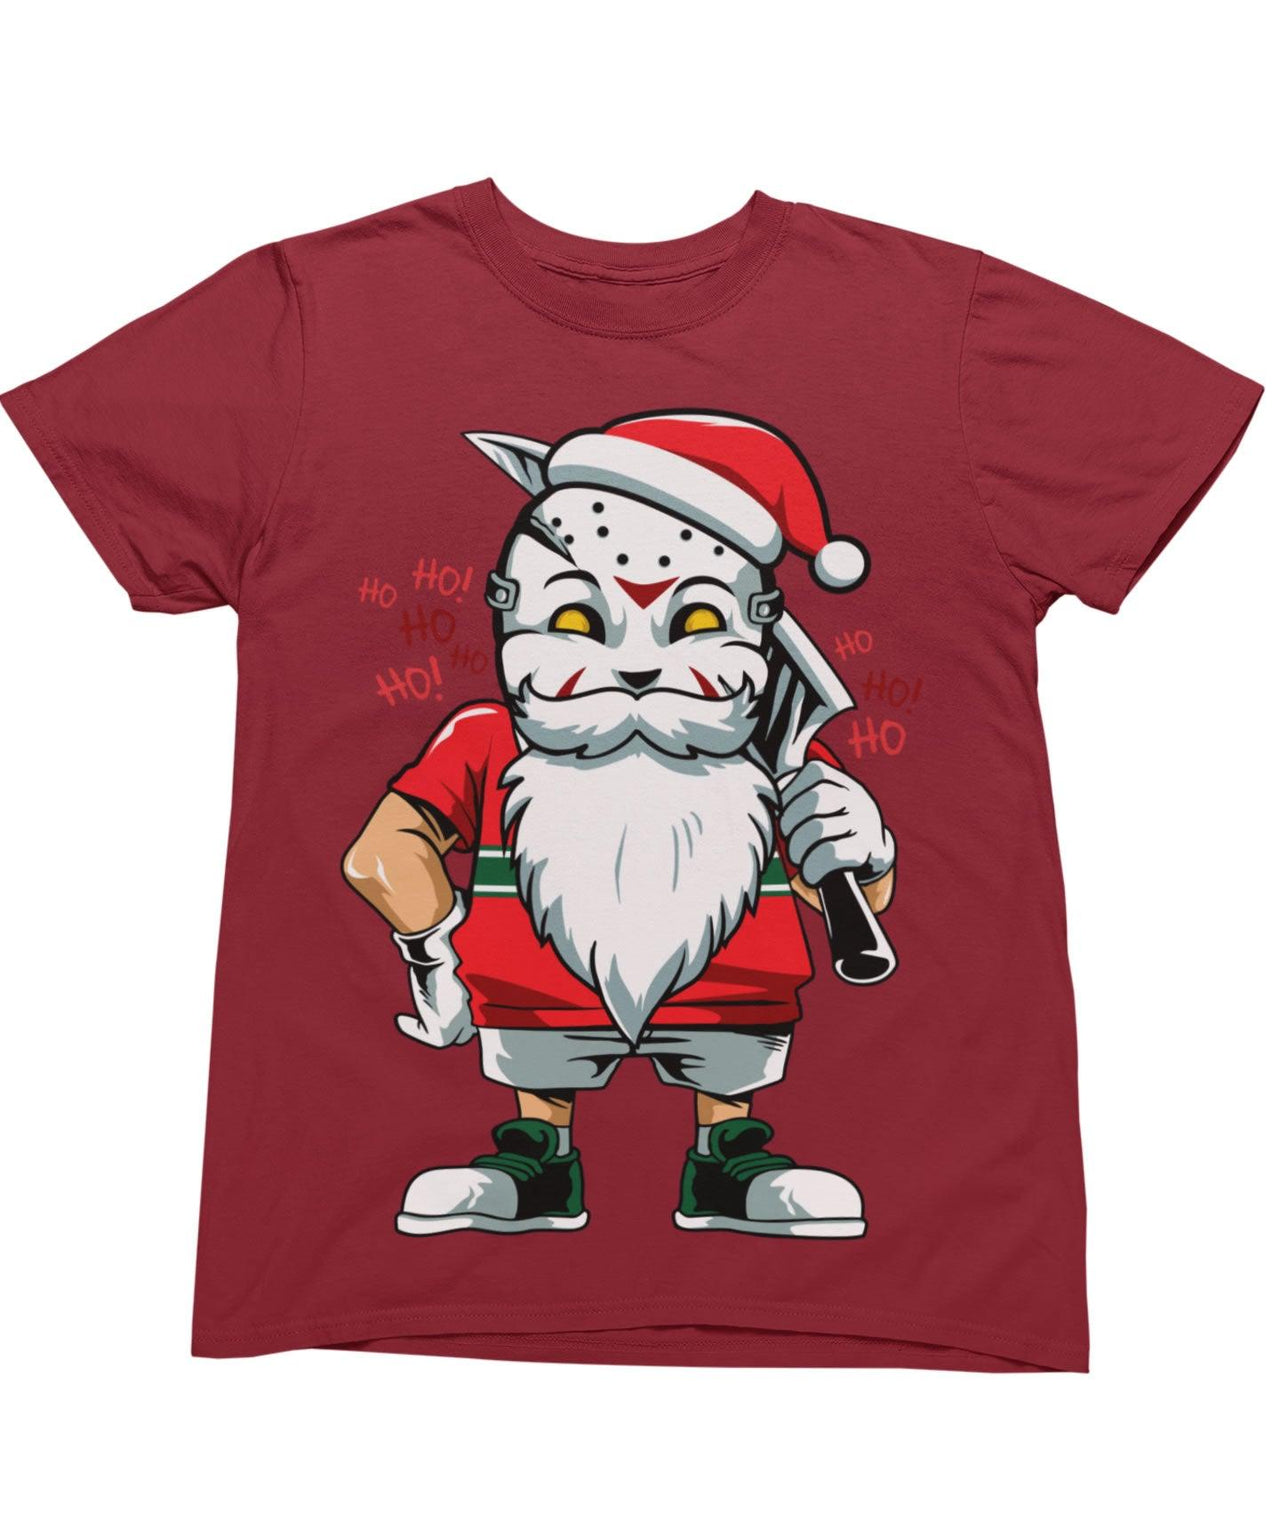 Another Evil Santa Unisex Christmas Graphic T-Shirt For Men 8Ball